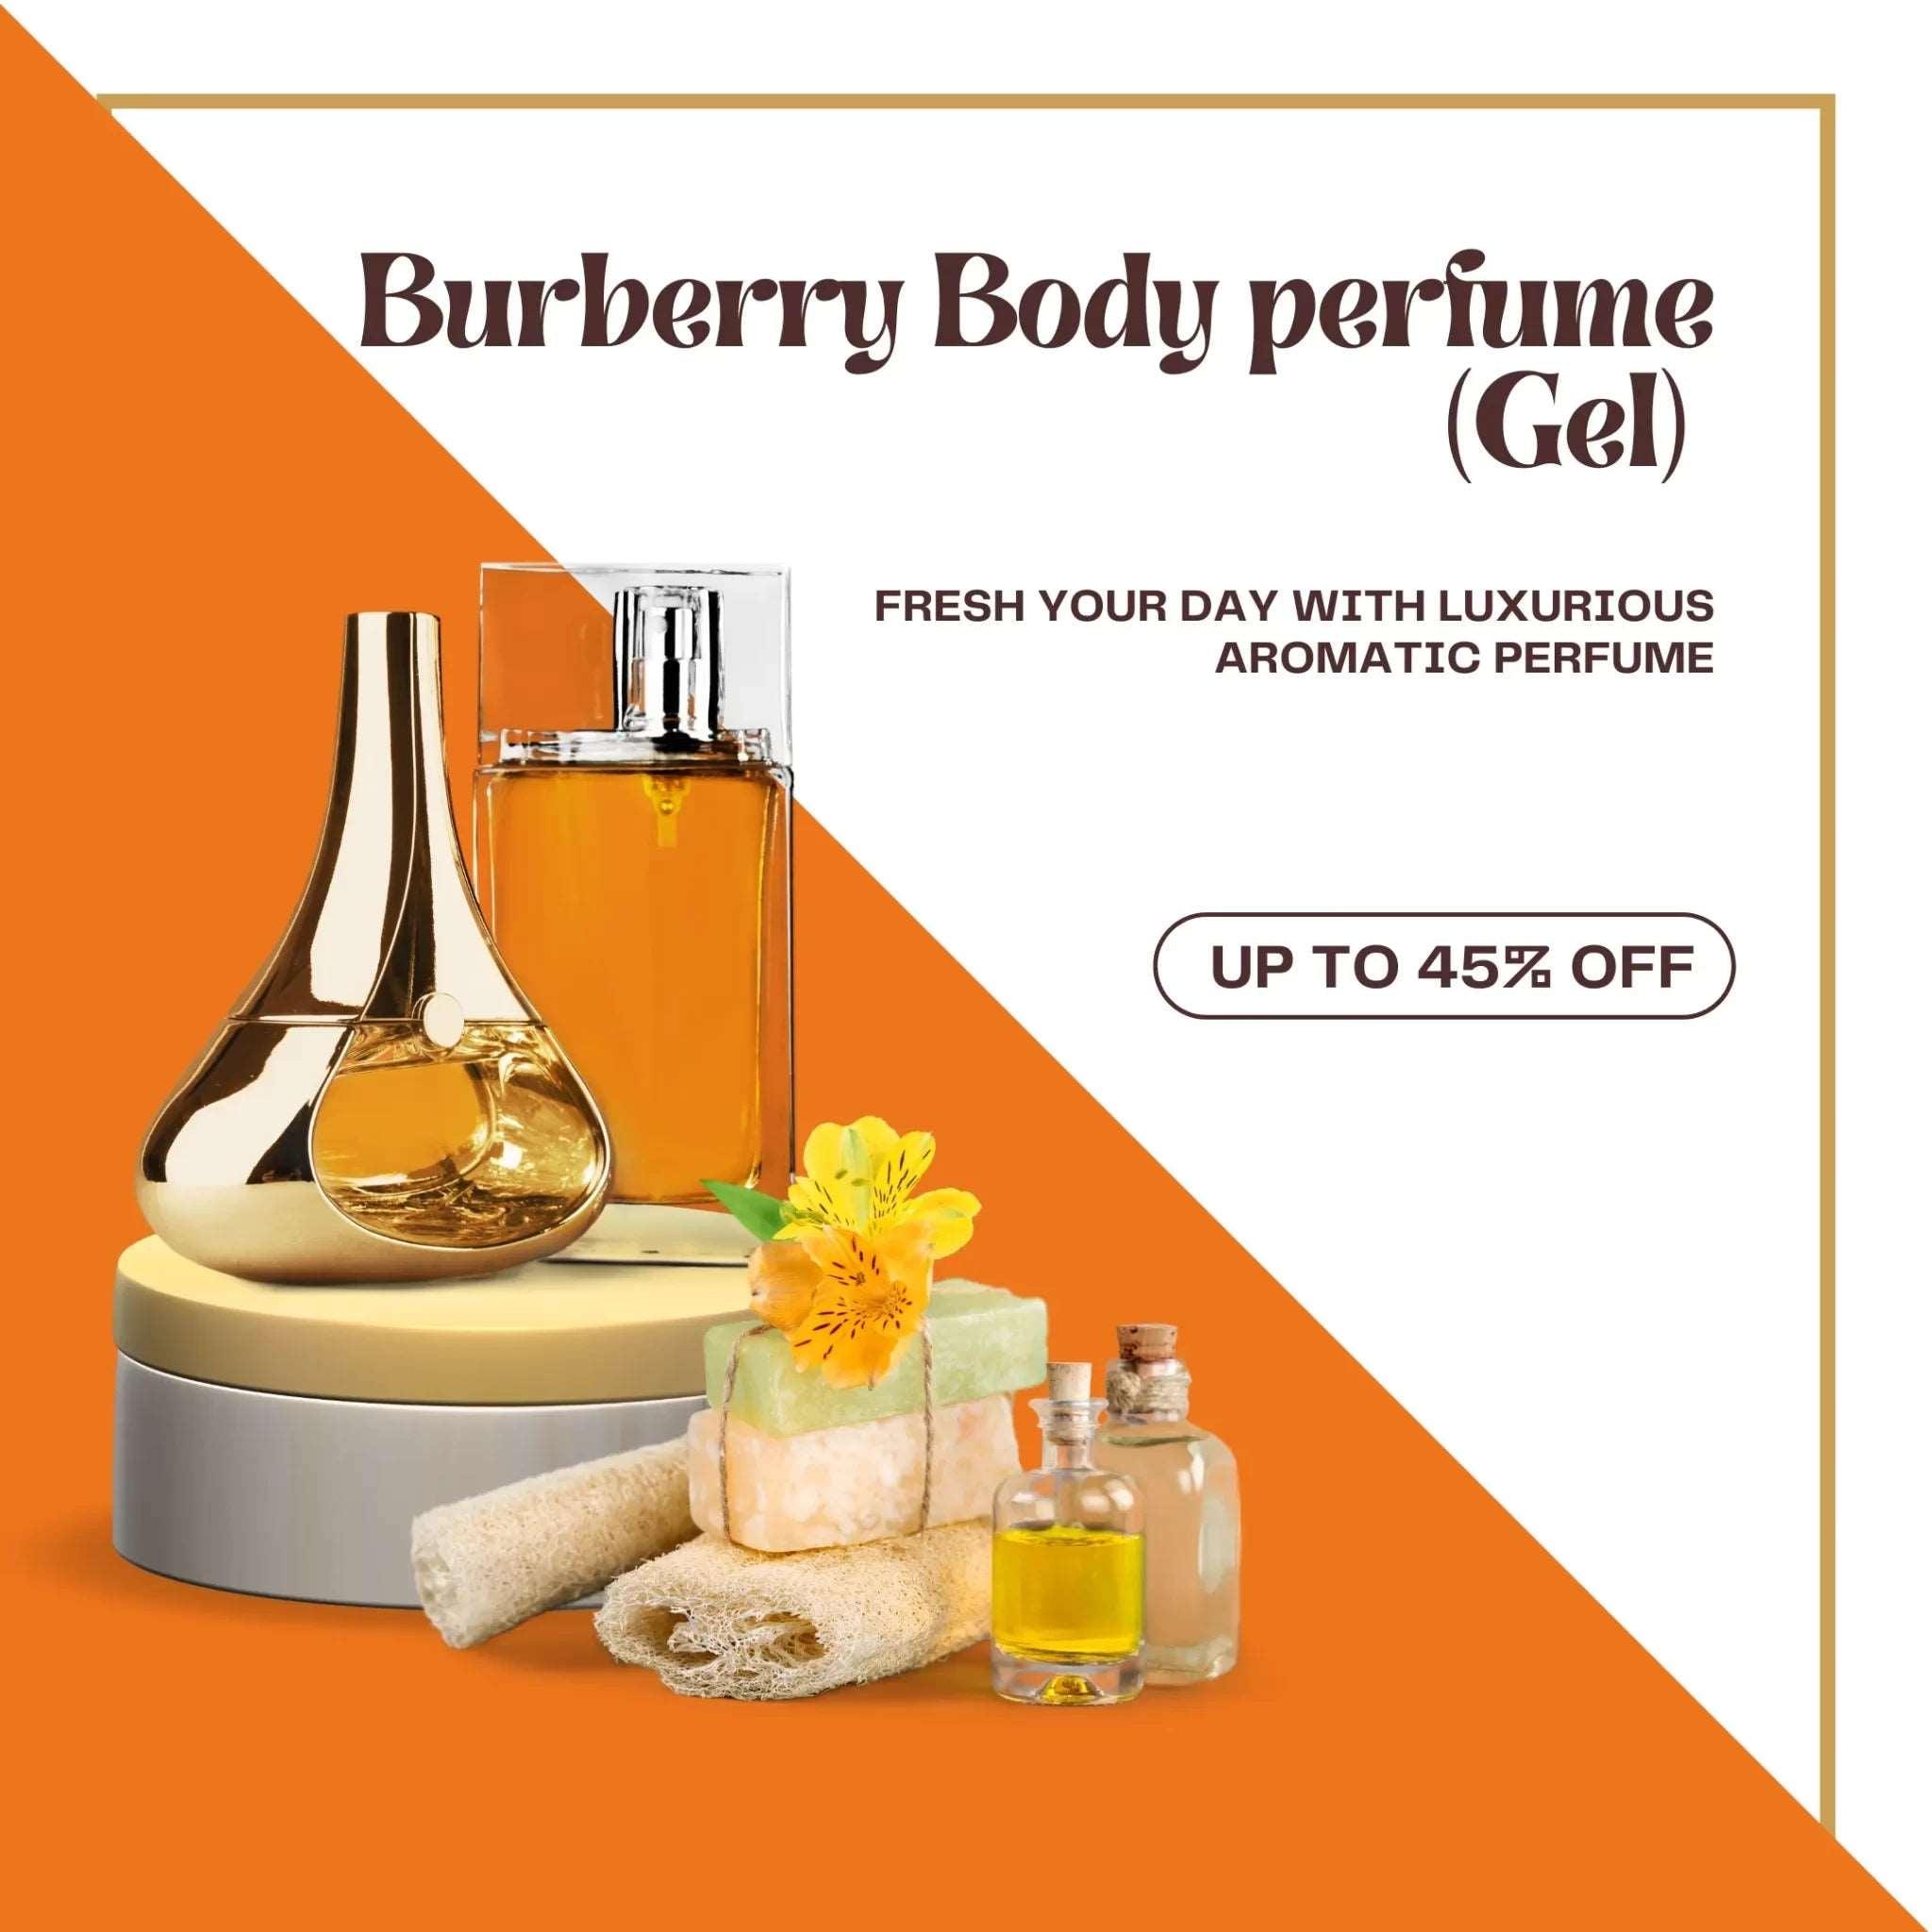 Burberry Body Perfume Price in Pakistan